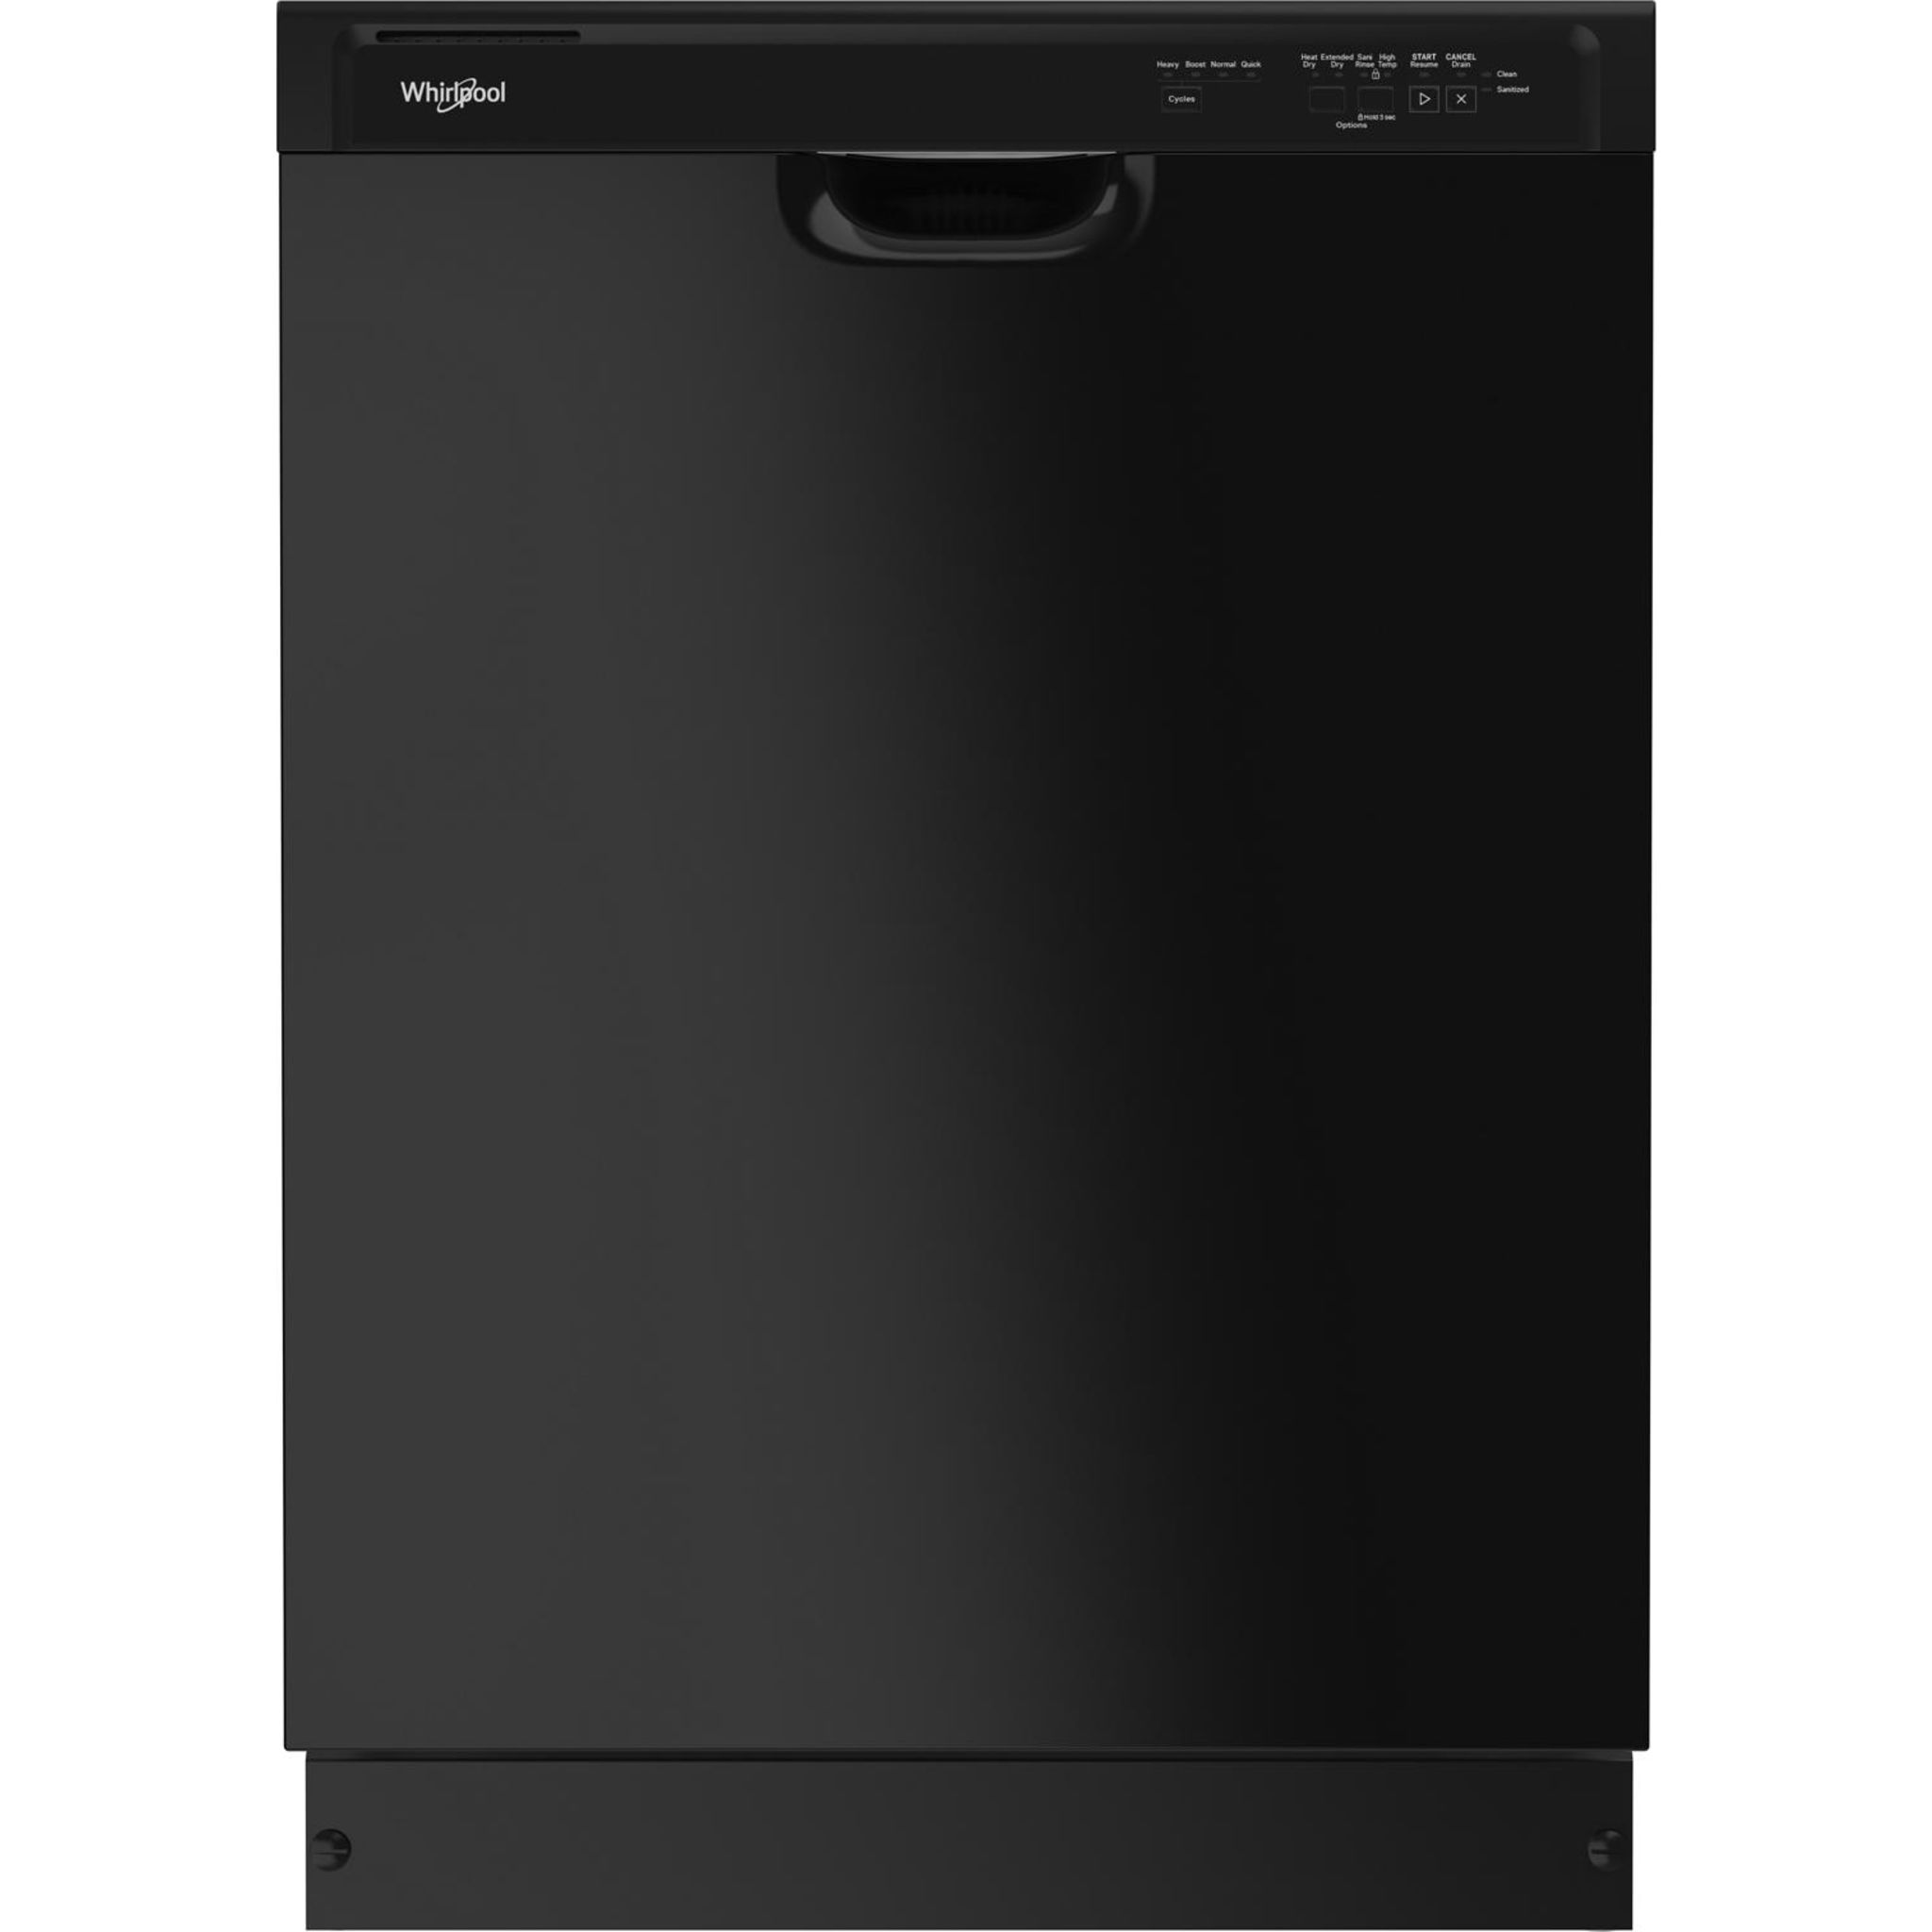 Whirlpool, Dishwasher (WDF341PAPB) - Black